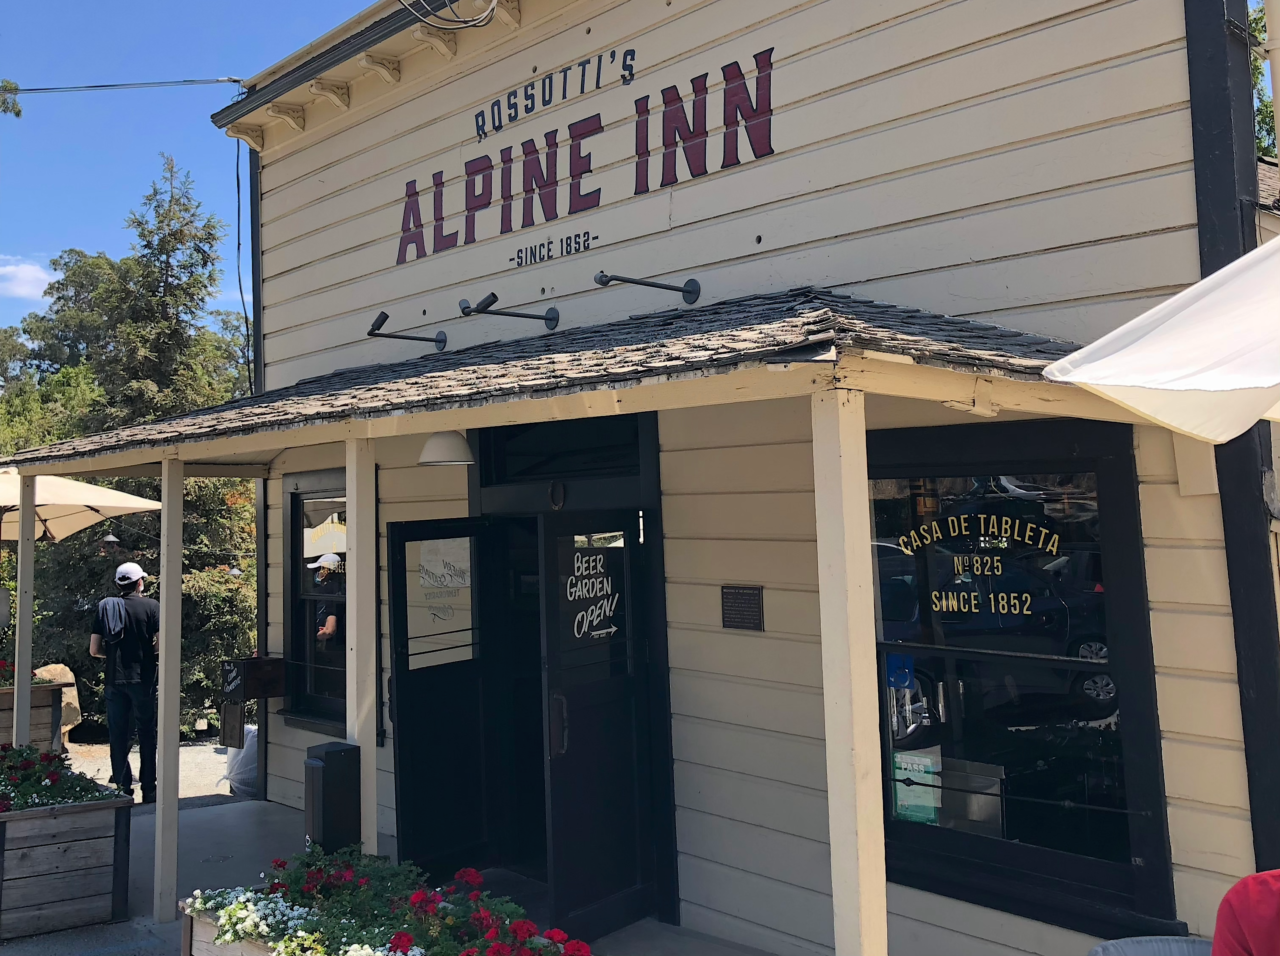 Scenes from Rossotti’s Alpine Inn, July 2021